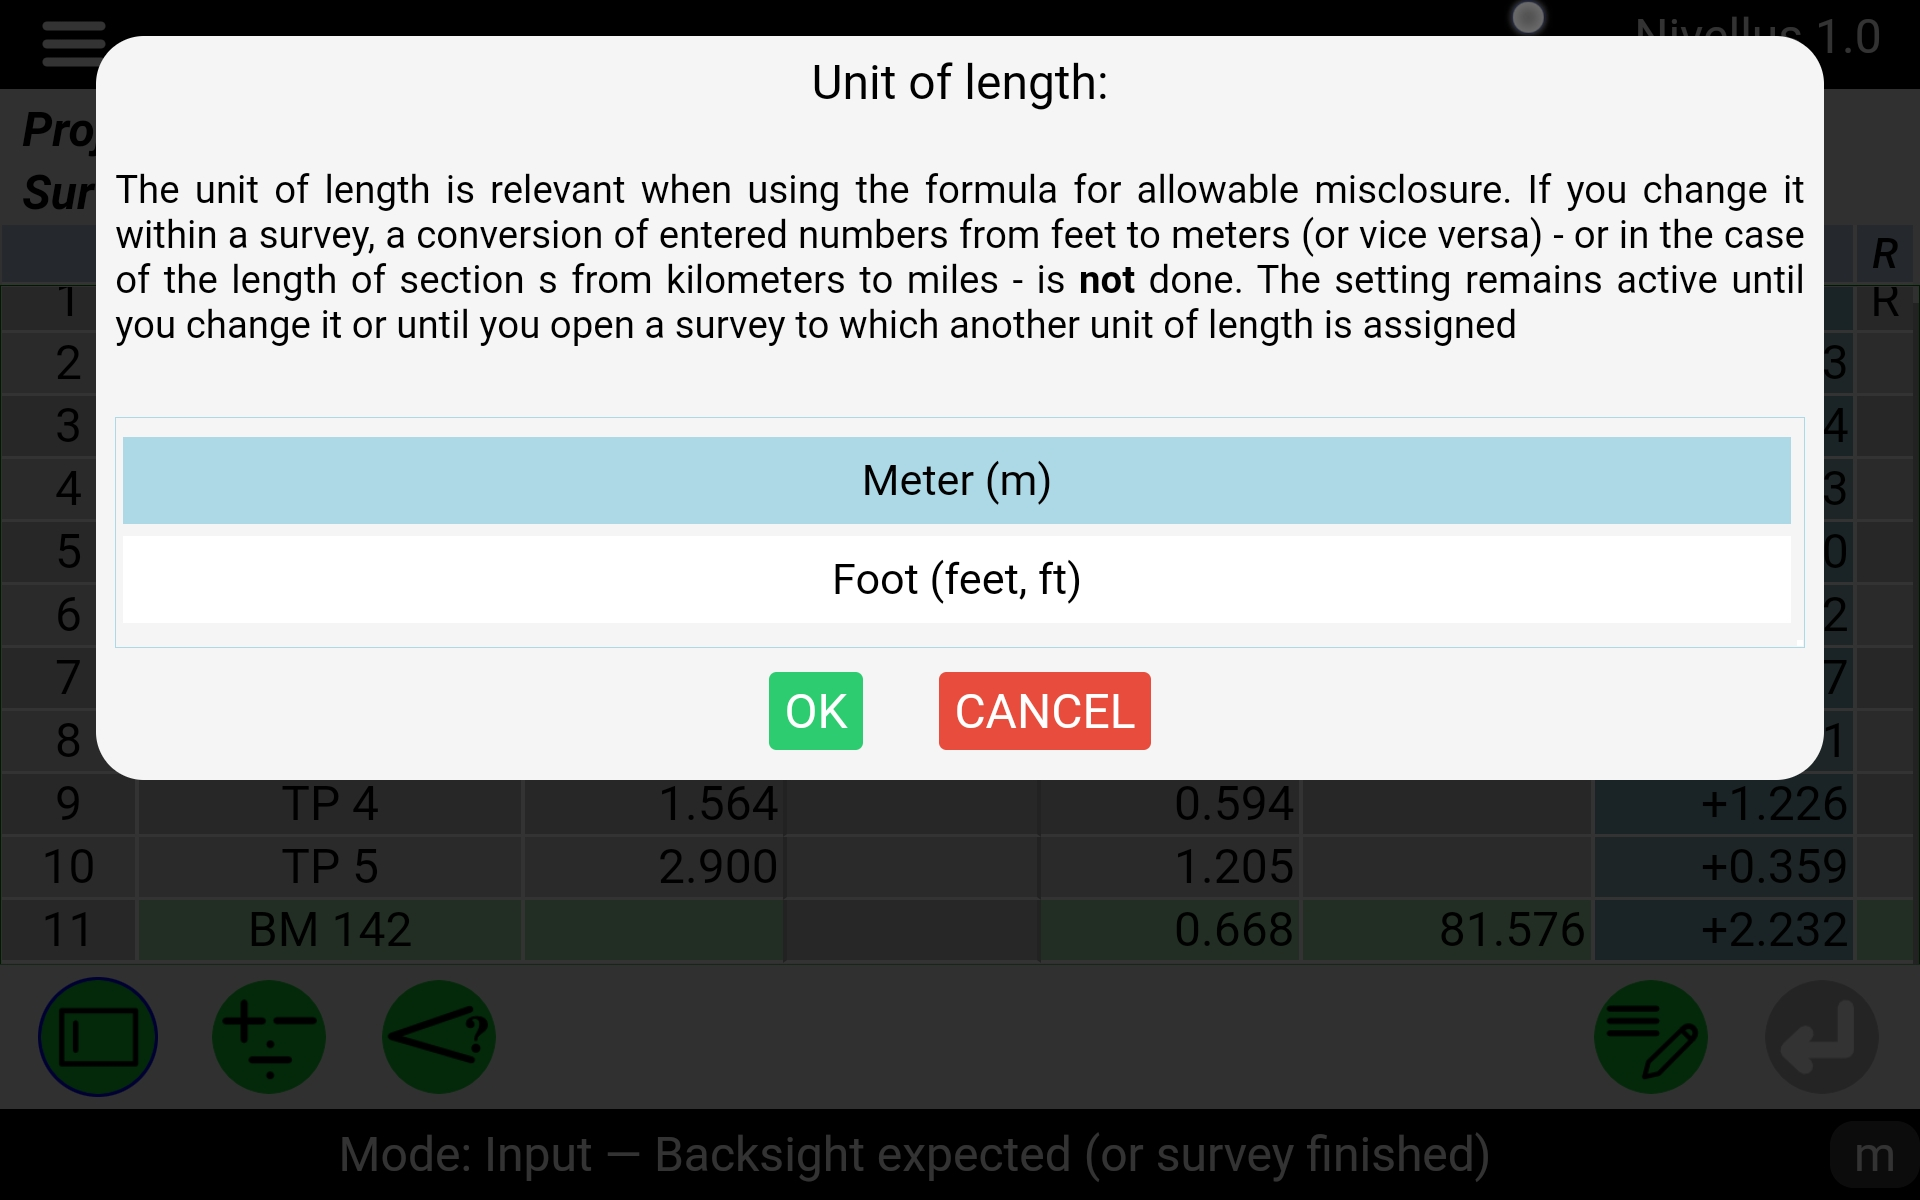 Select unit of length - meter / feet